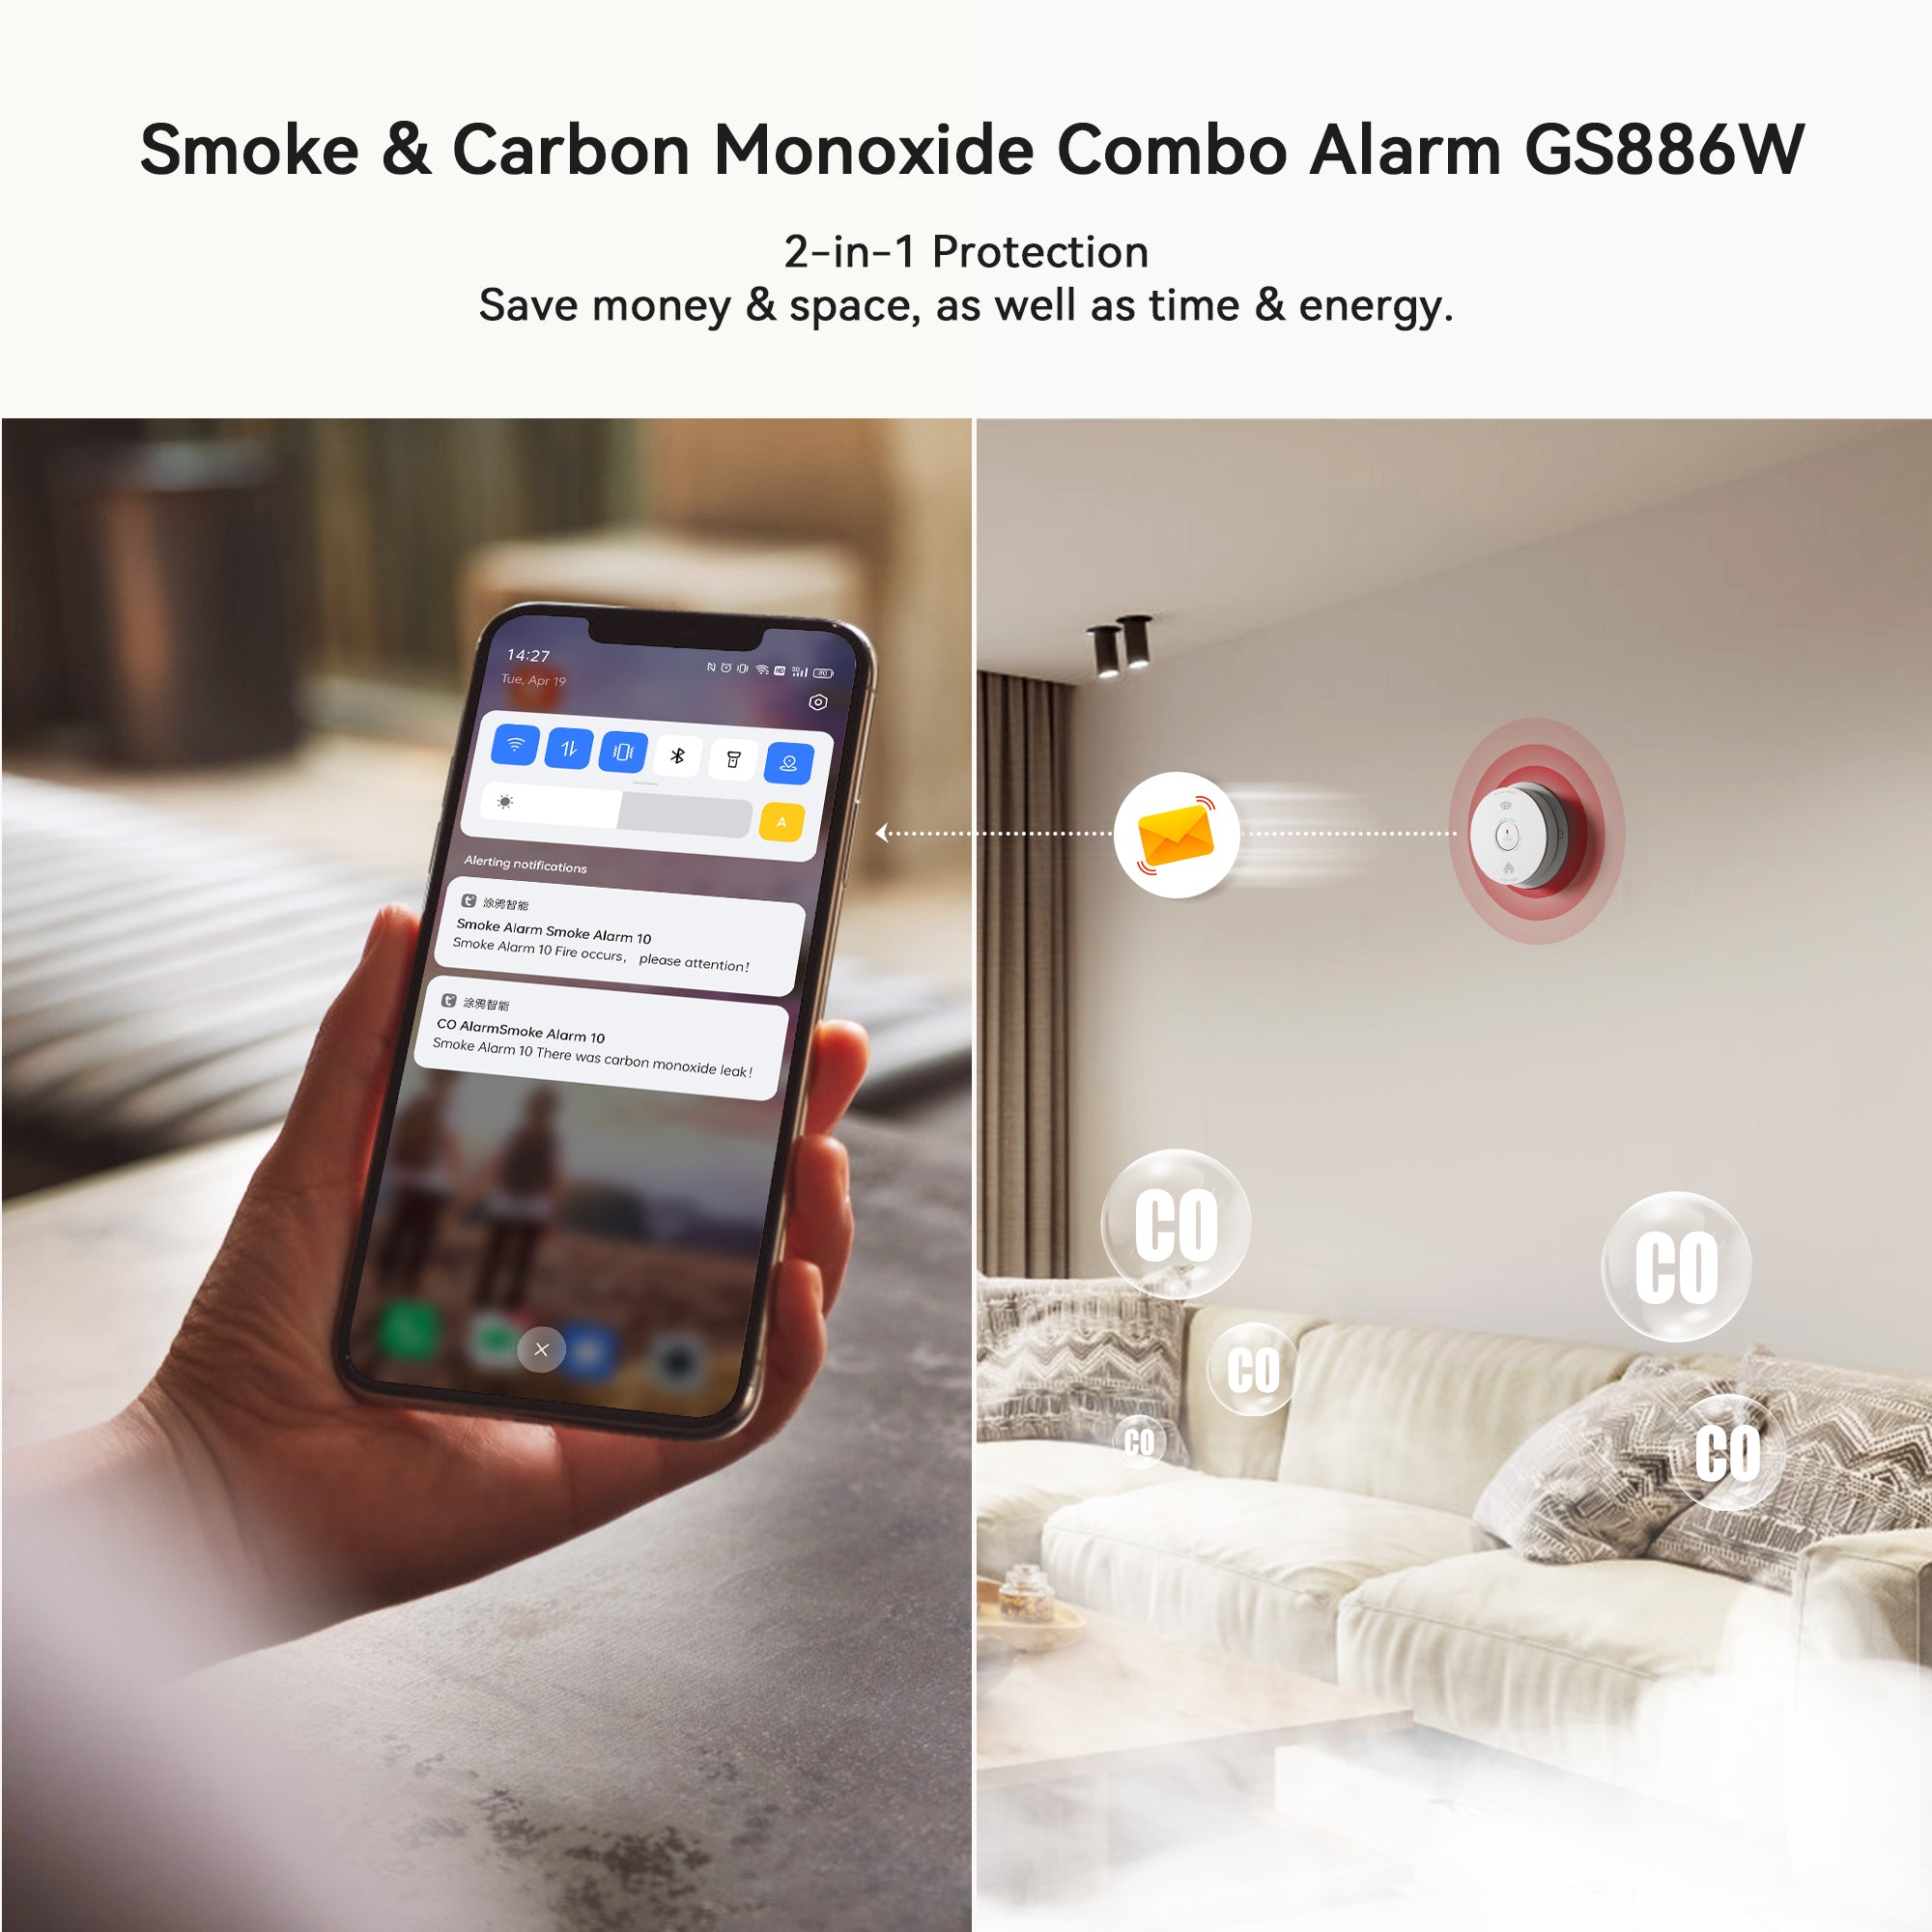 Siterwell GS886W 2.4 GHz WiFi Smart Smoke & Carbon Monoxide Combo Alarm